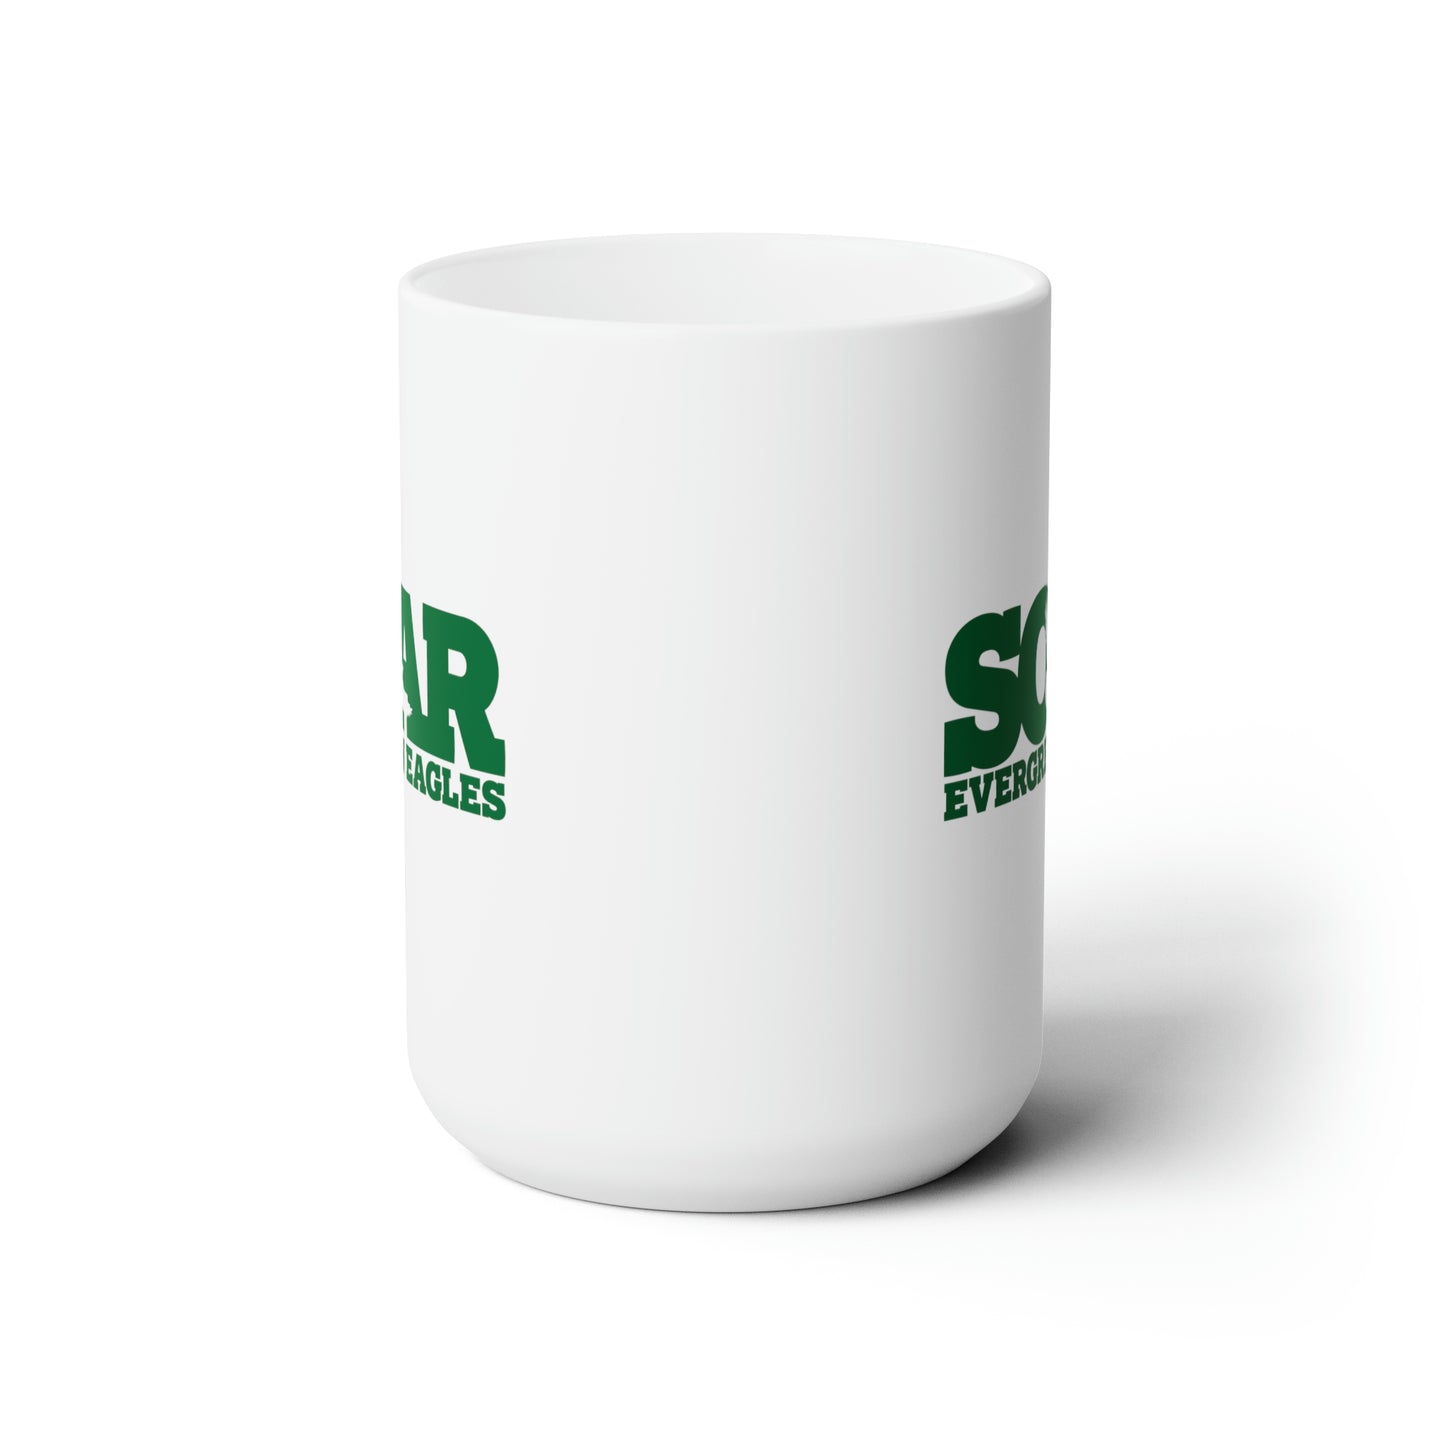 SOAR Evergreen Eagles - Ceramic Mug 15oz